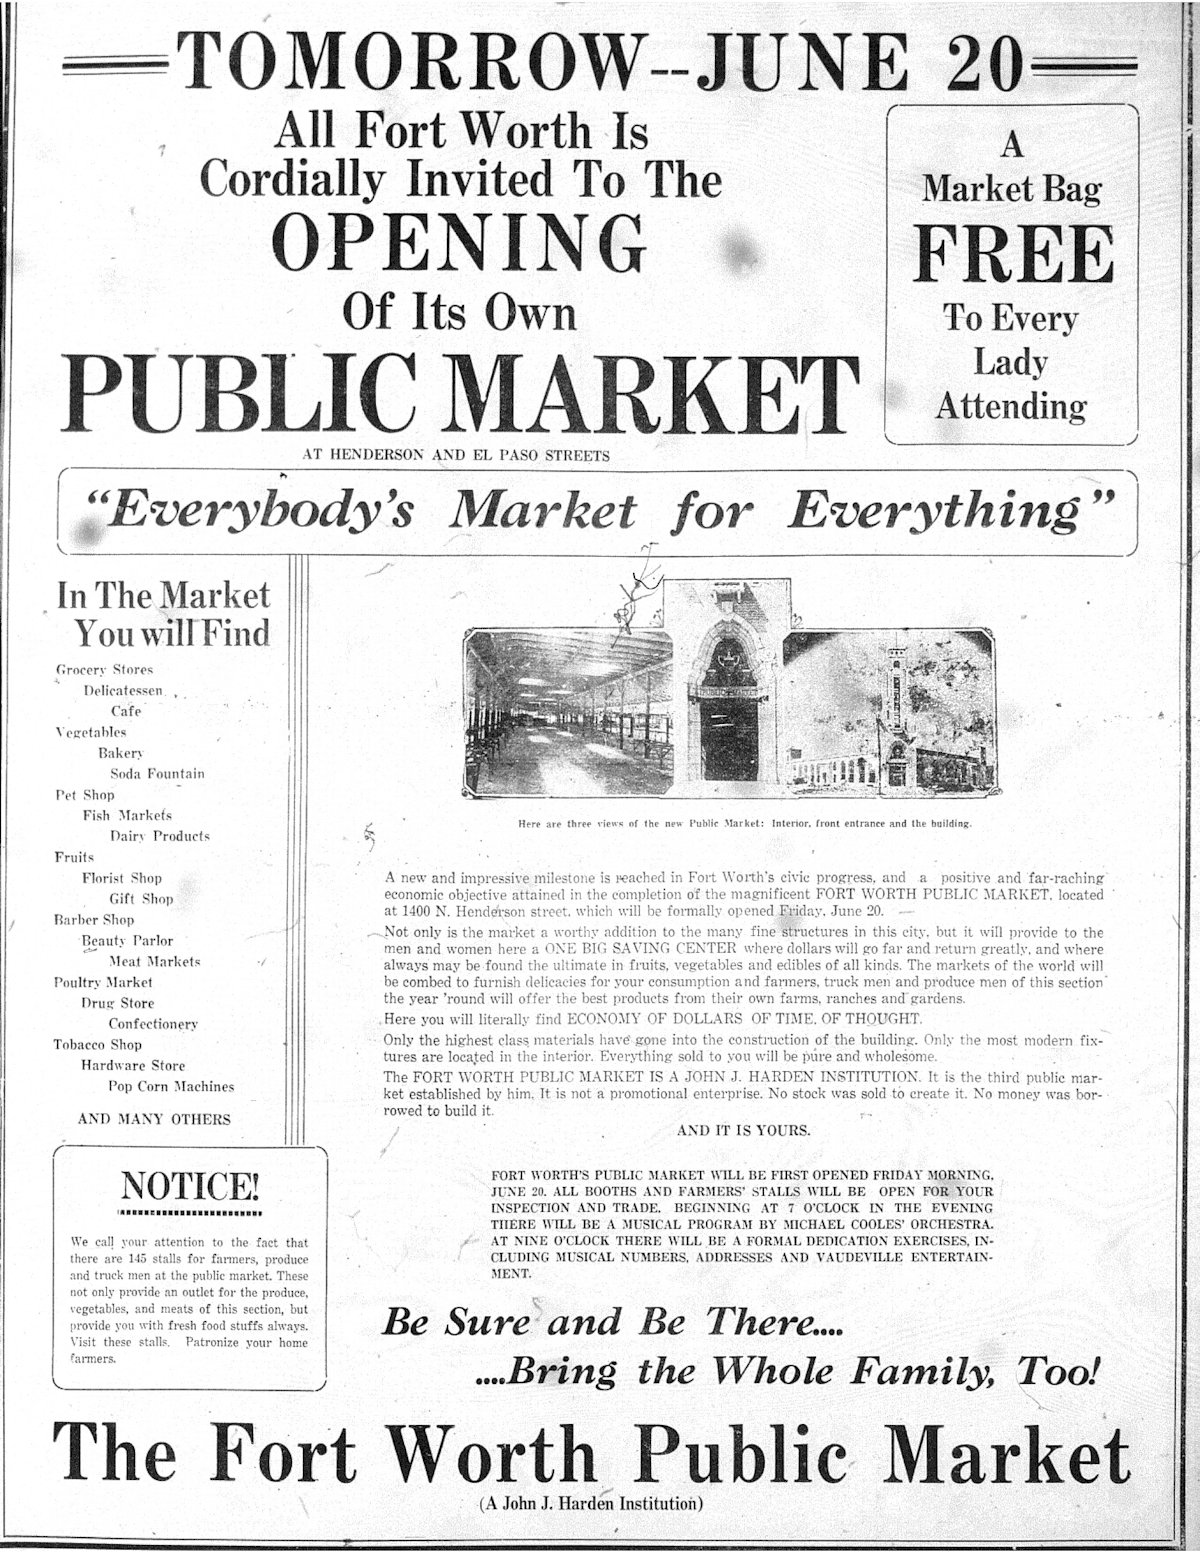 public market full page ad